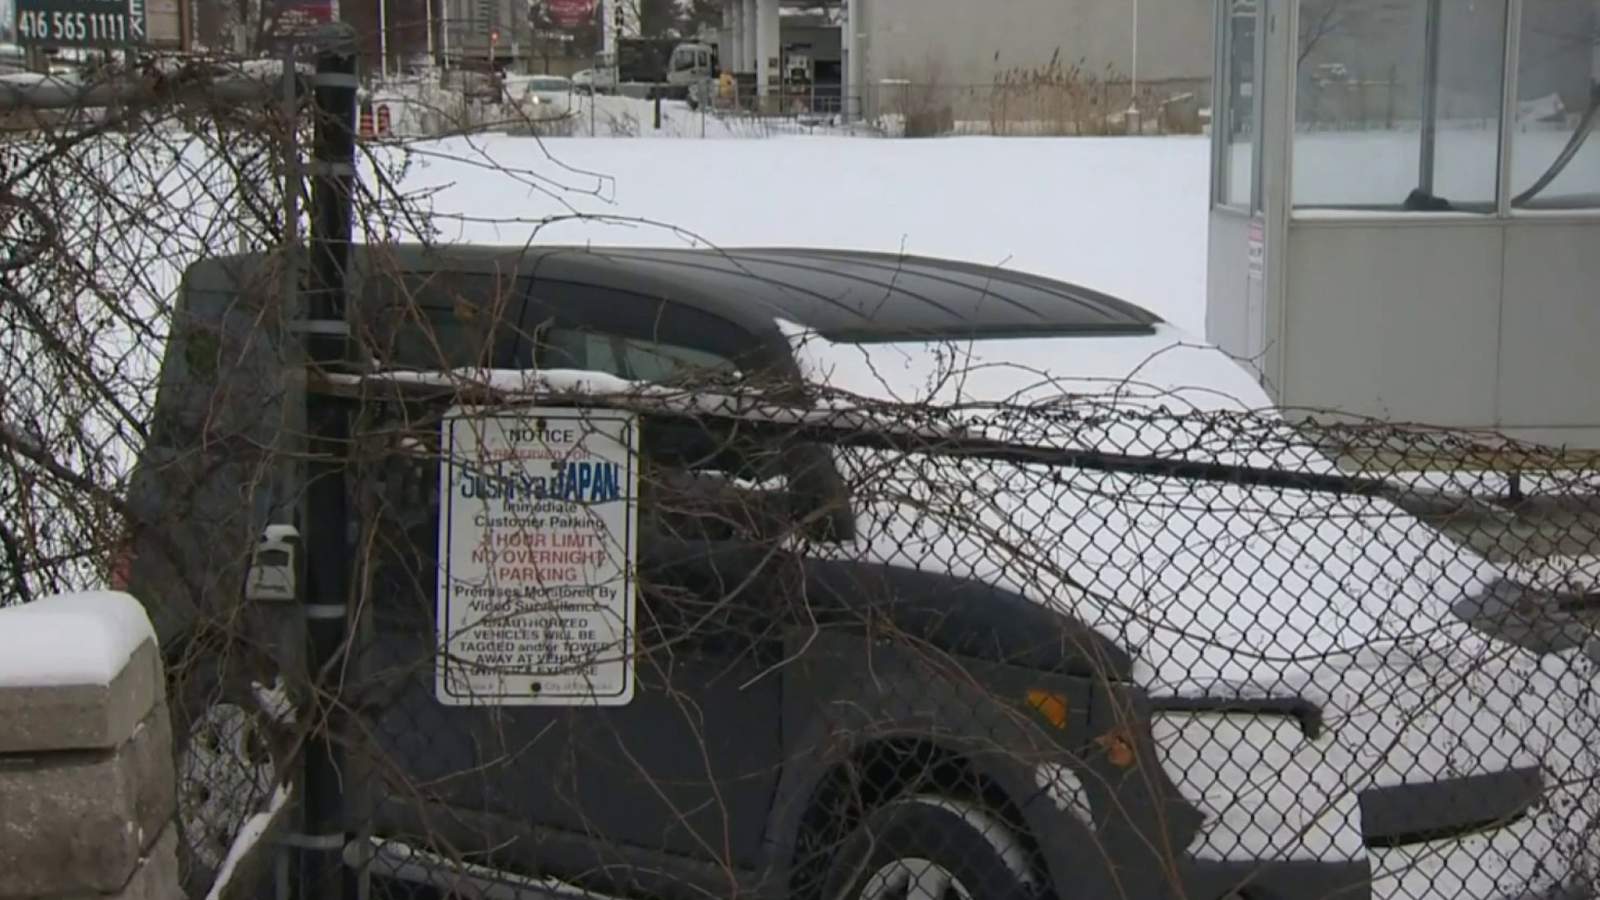 Metro Detroit woman faces $2.8K bill to retrieve car from Toronto parking lot